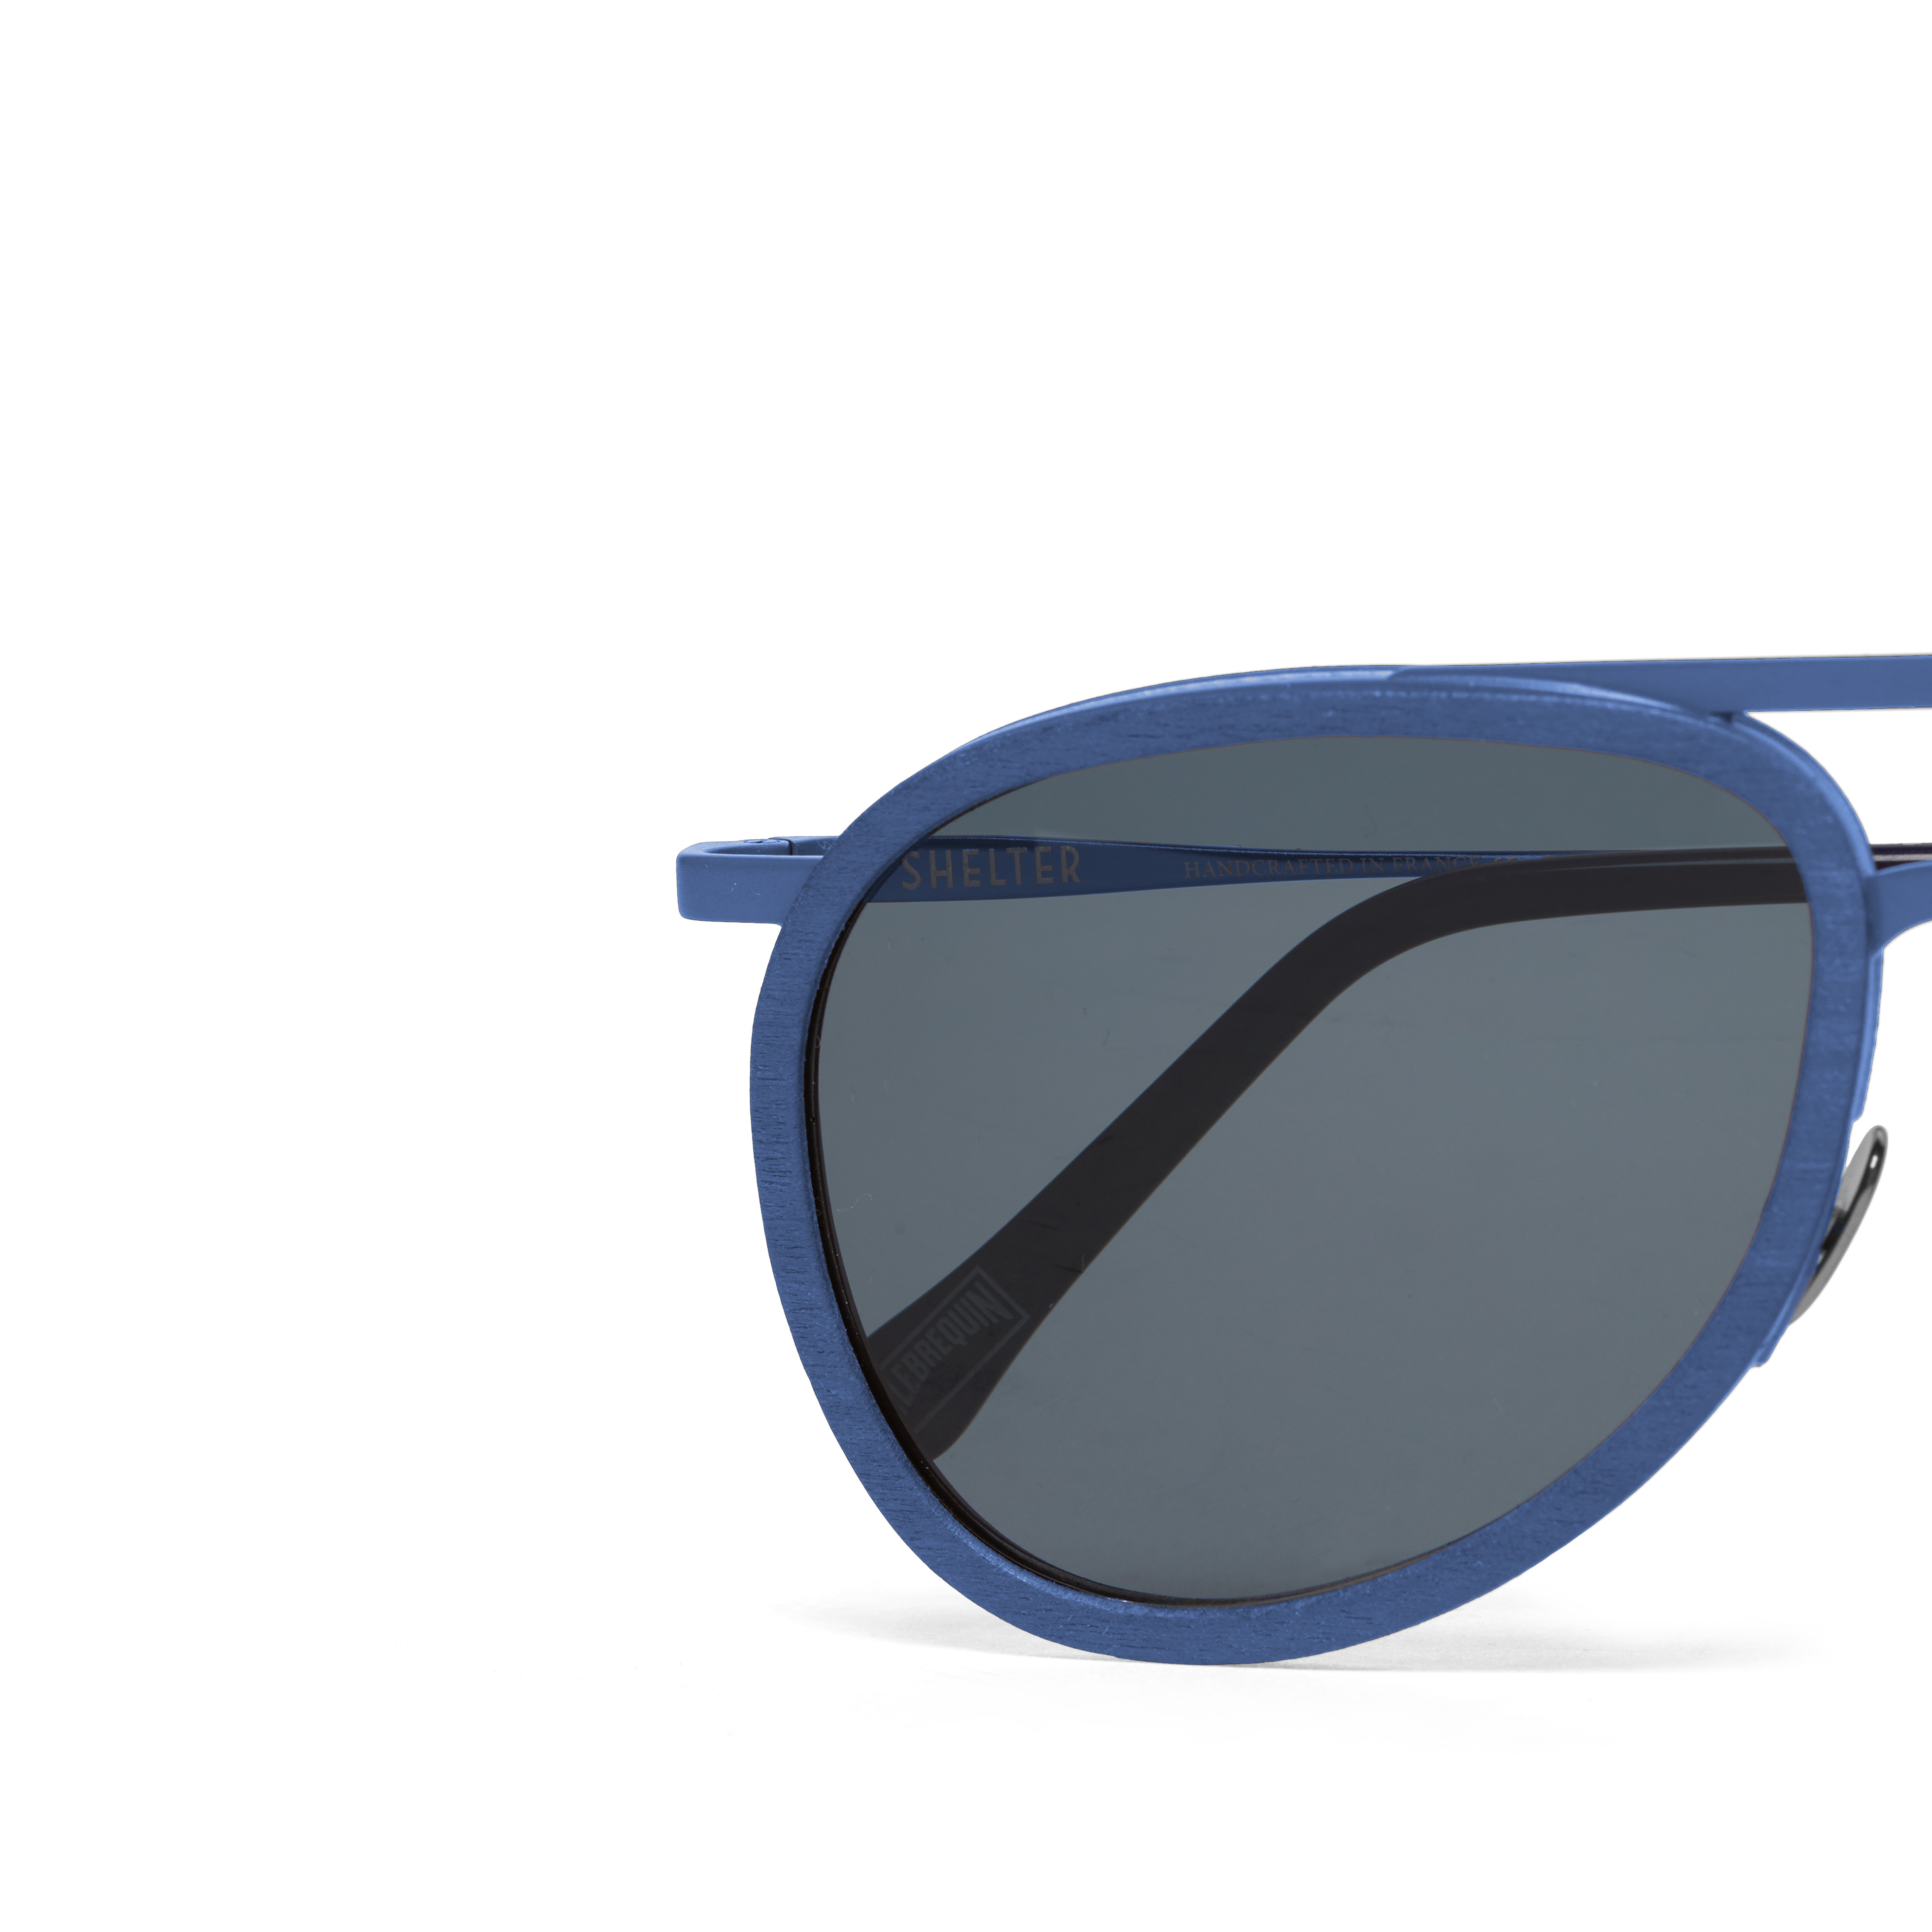 Unisex Wood Sunglasses Solid - VBQ x Shelter - 5